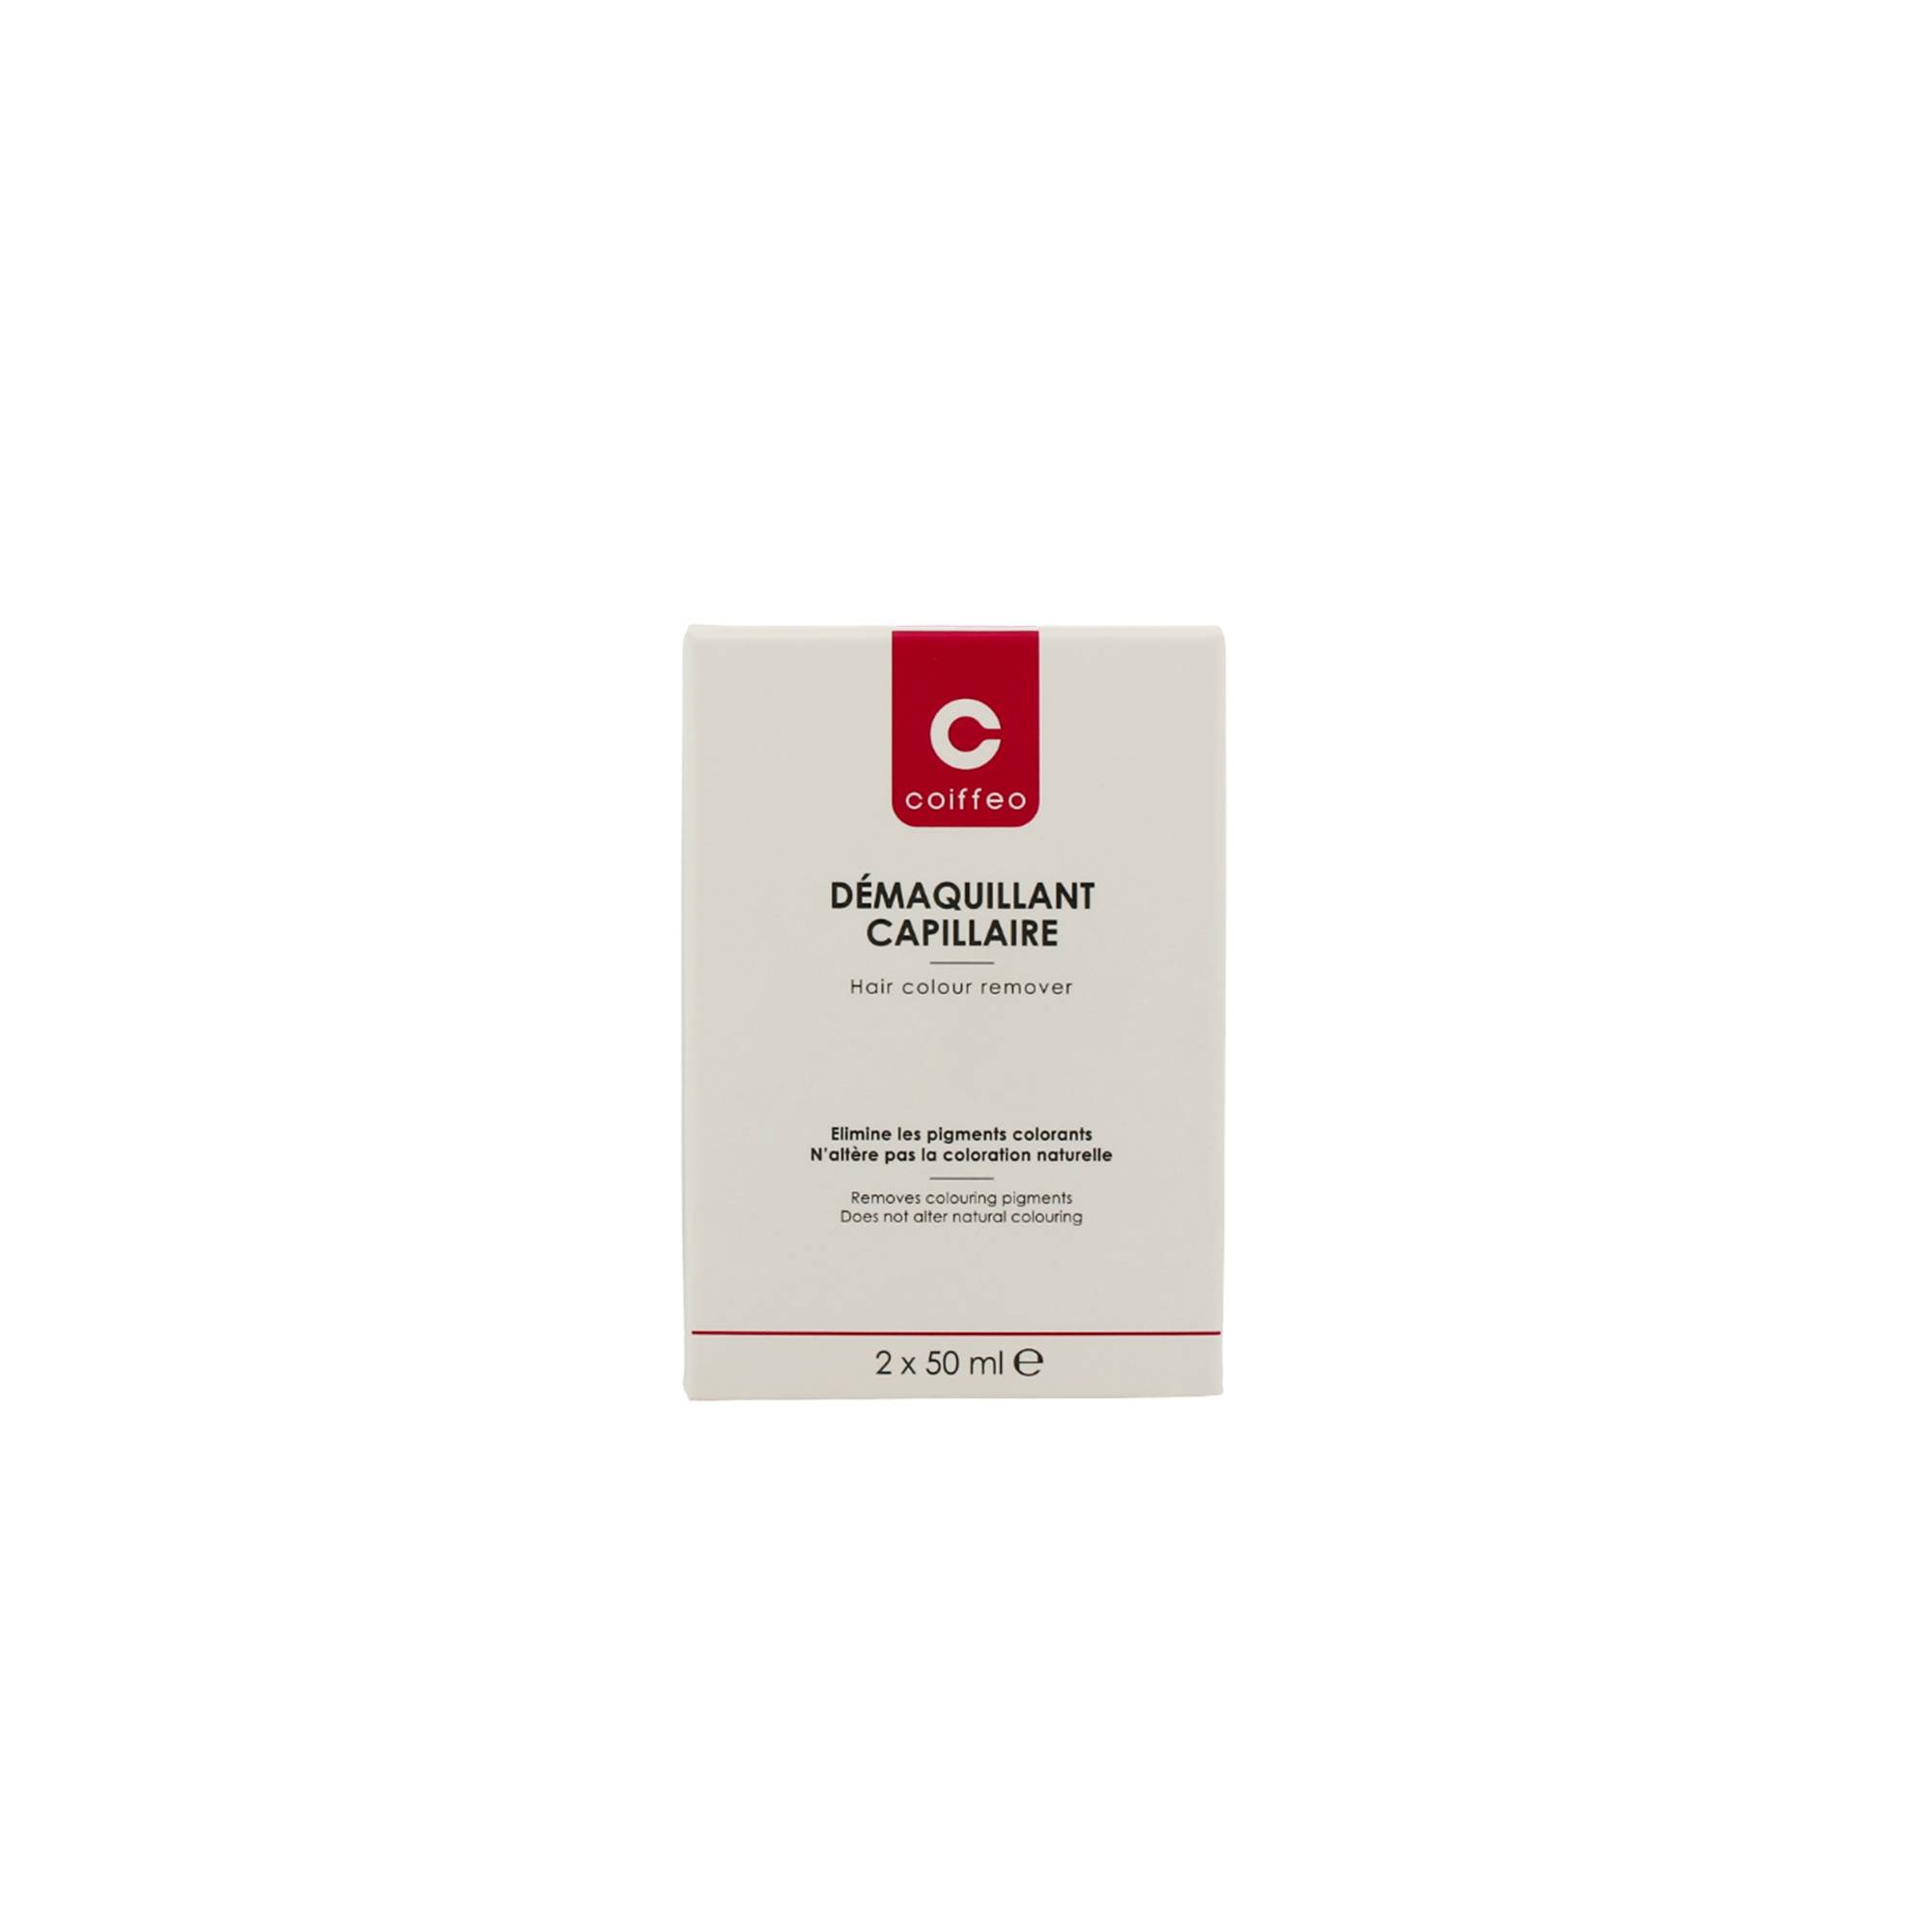 Démaquillant capillaire Hair colour remover (2x50ml) de la marque Coiffeo Contenance 100ml - 3